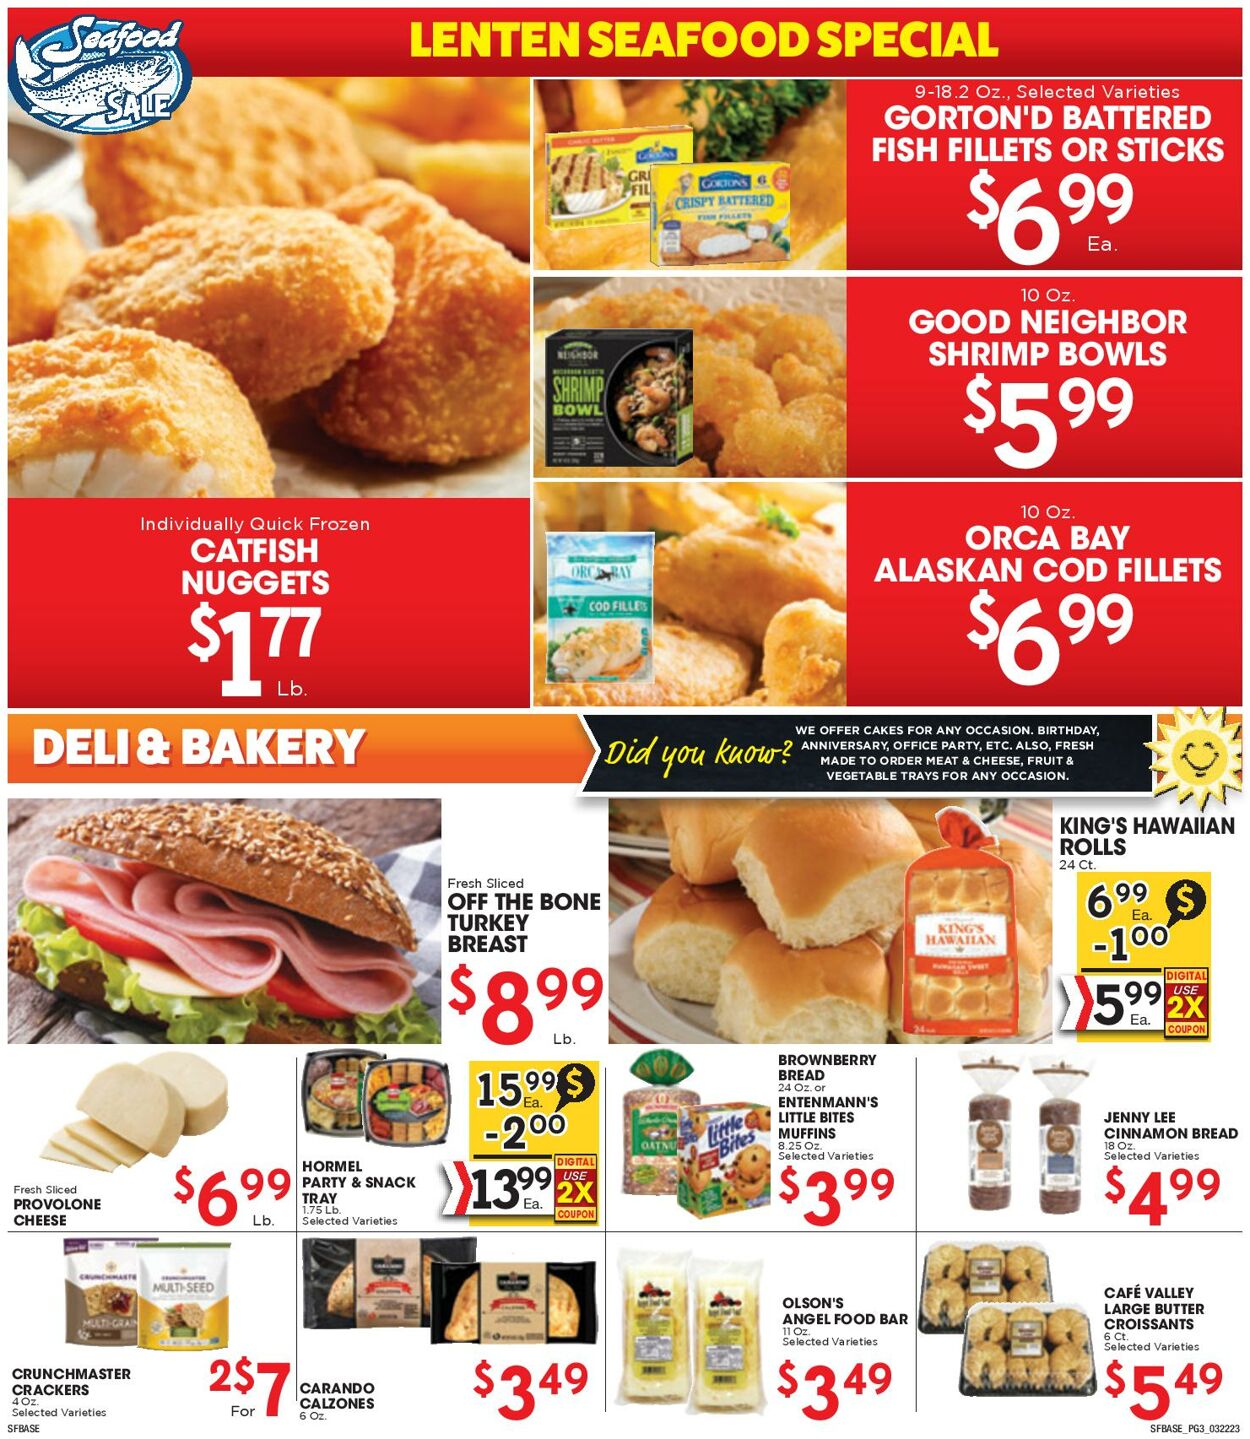 Weekly ad Sunshine Foods 03/22/2023 - 03/28/2023